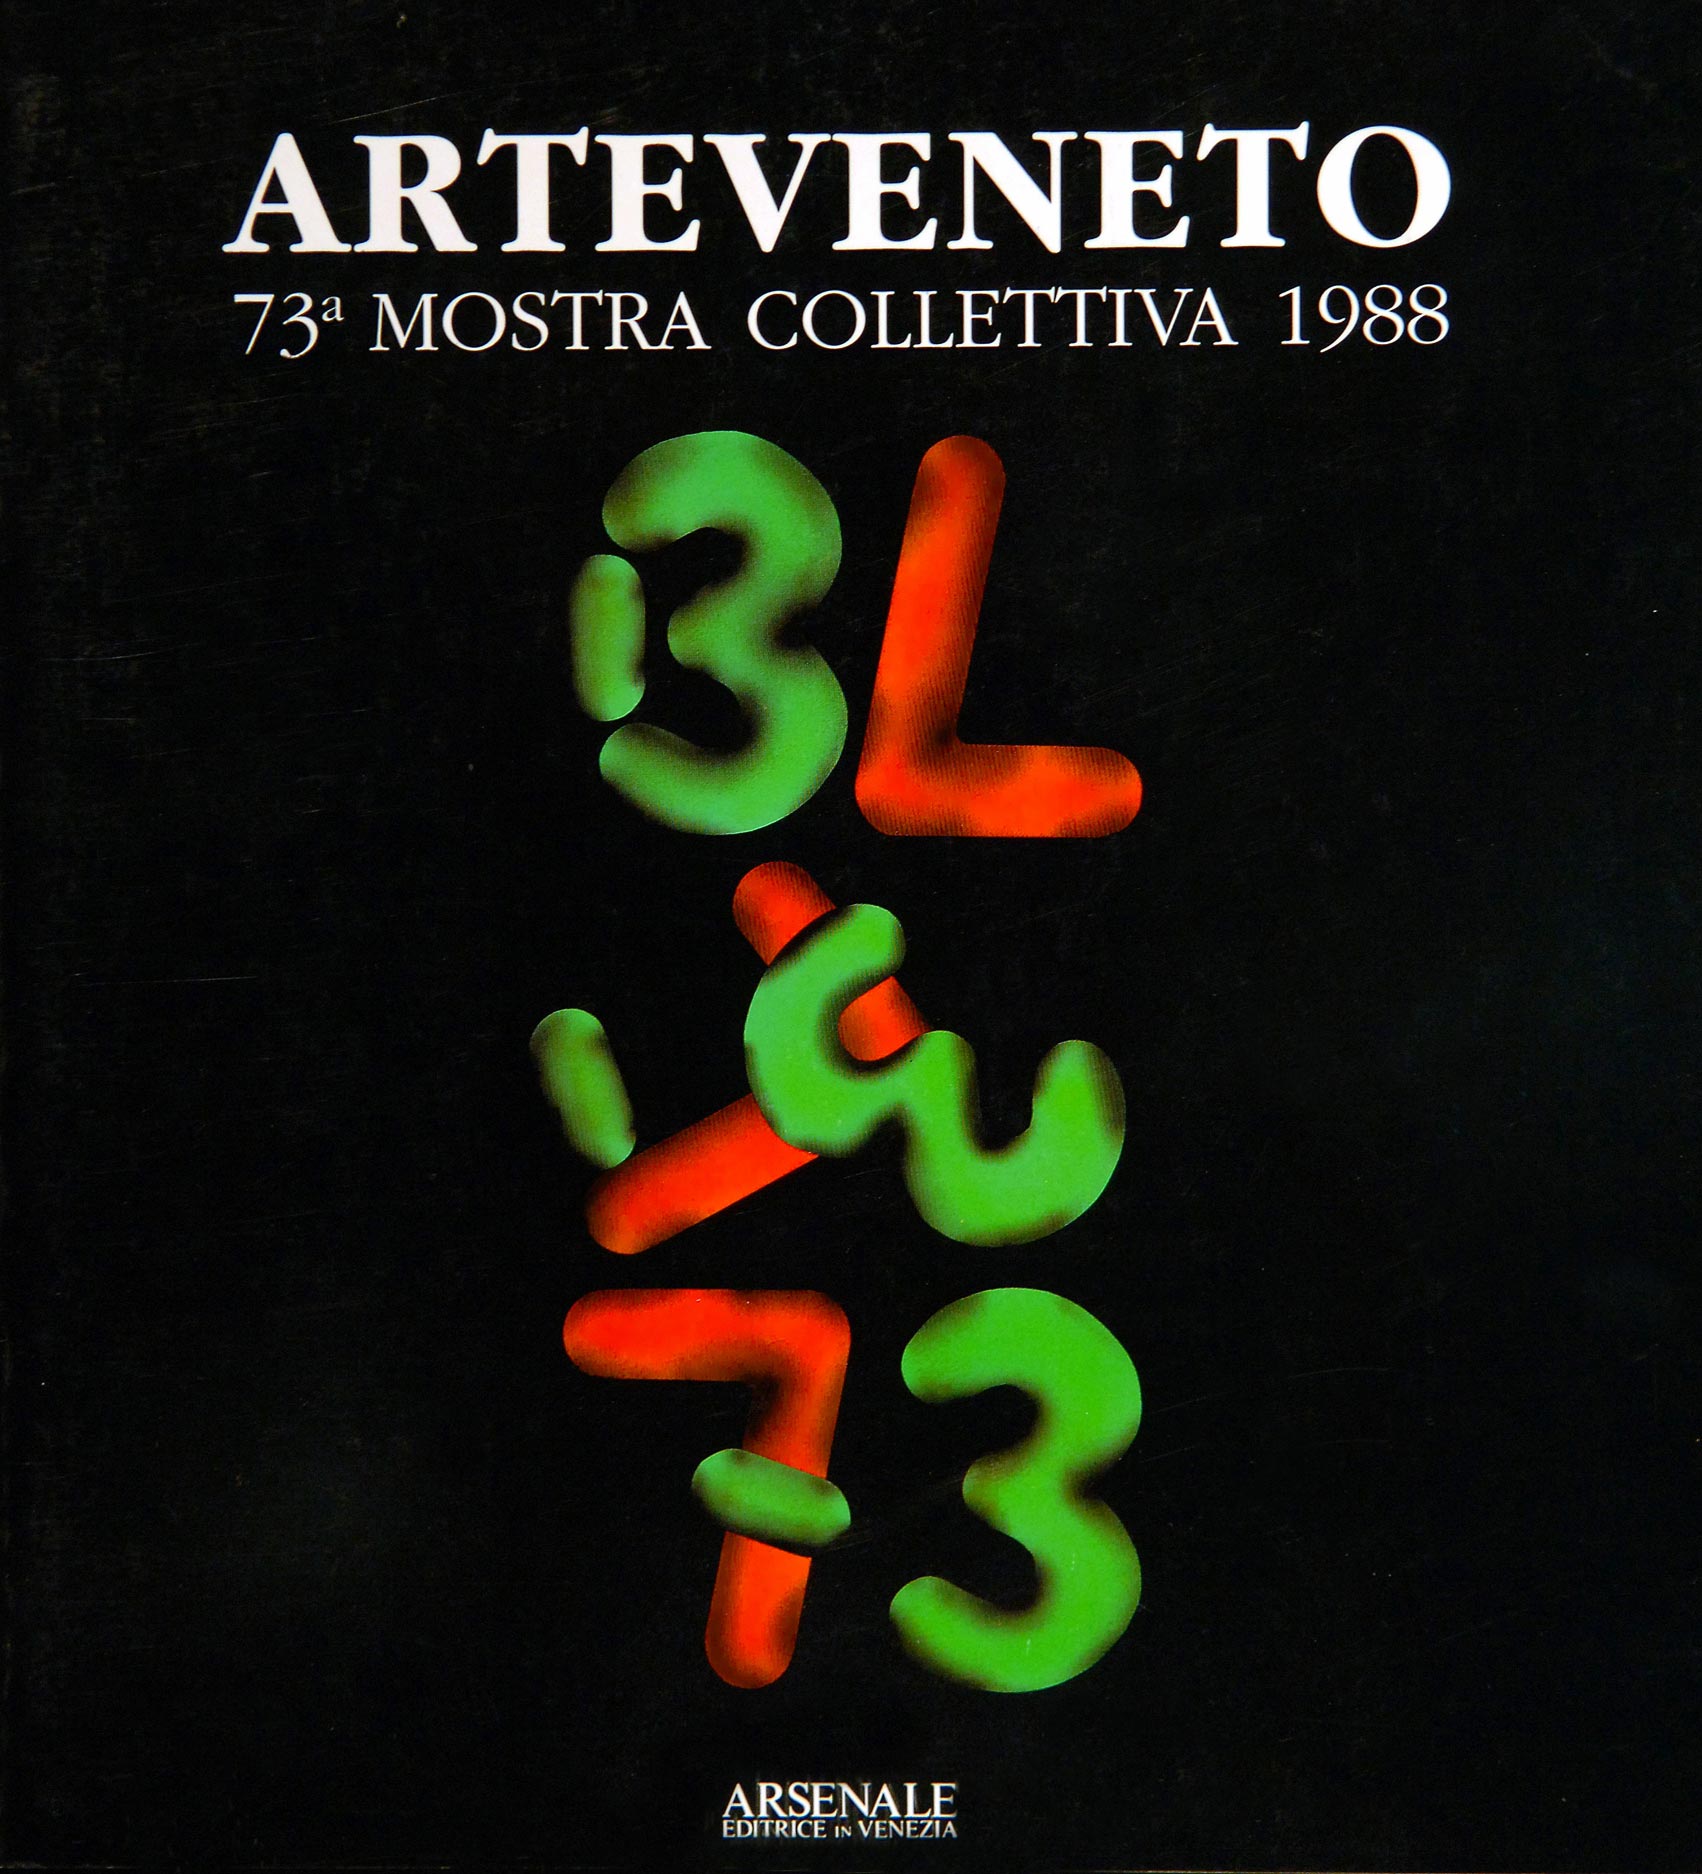 BVM - ARTEVENETO - ED. ARSENALE - VENEZIA -1988